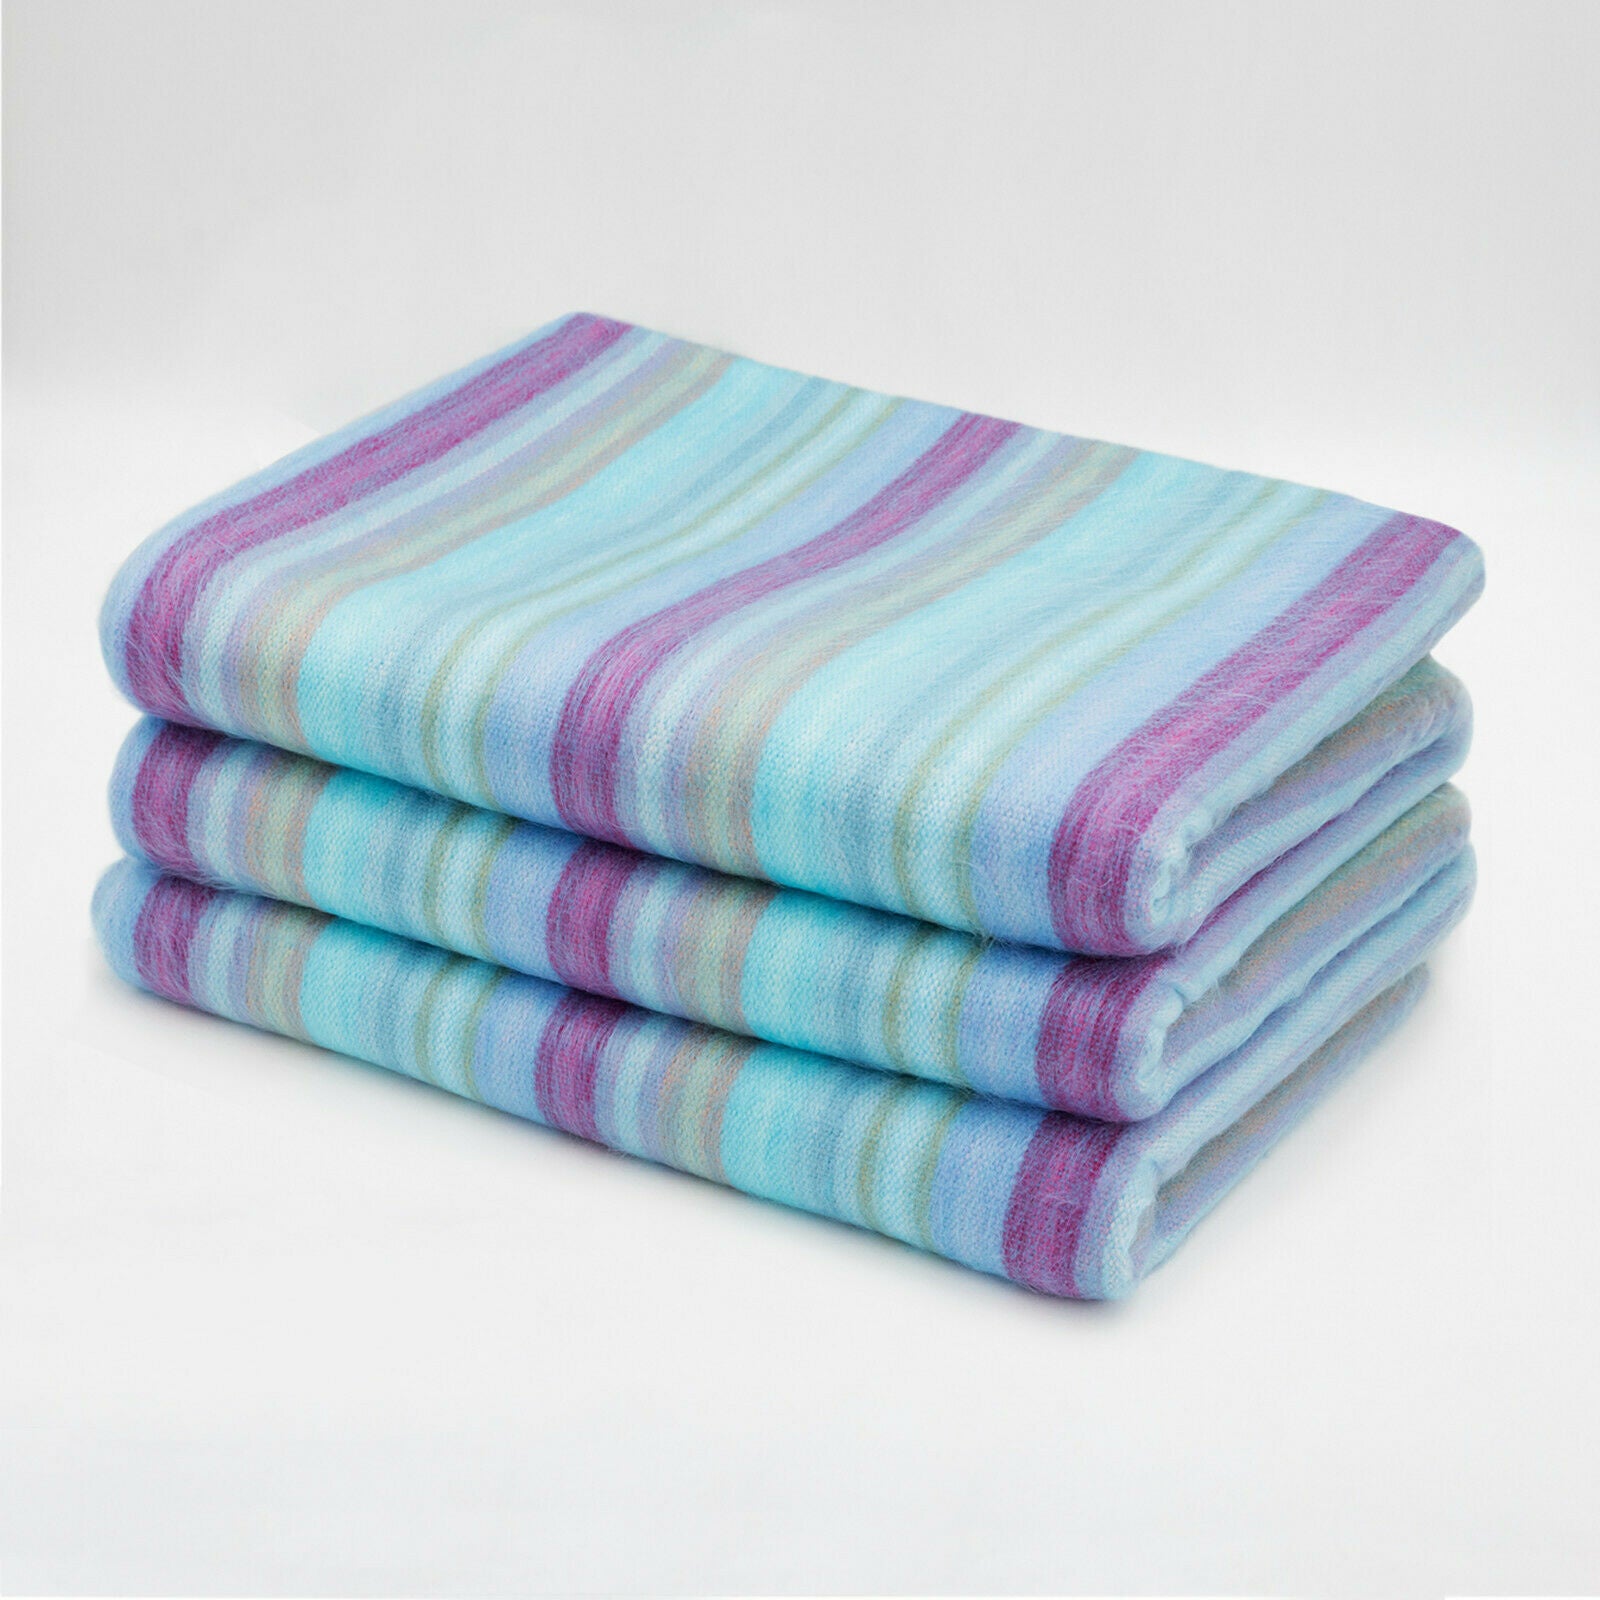 Tzacantza - Baby Alpaca Wool Throw Blanket / Sofa Cover - Queen 95" x 66" - aqua purple stripes pattern